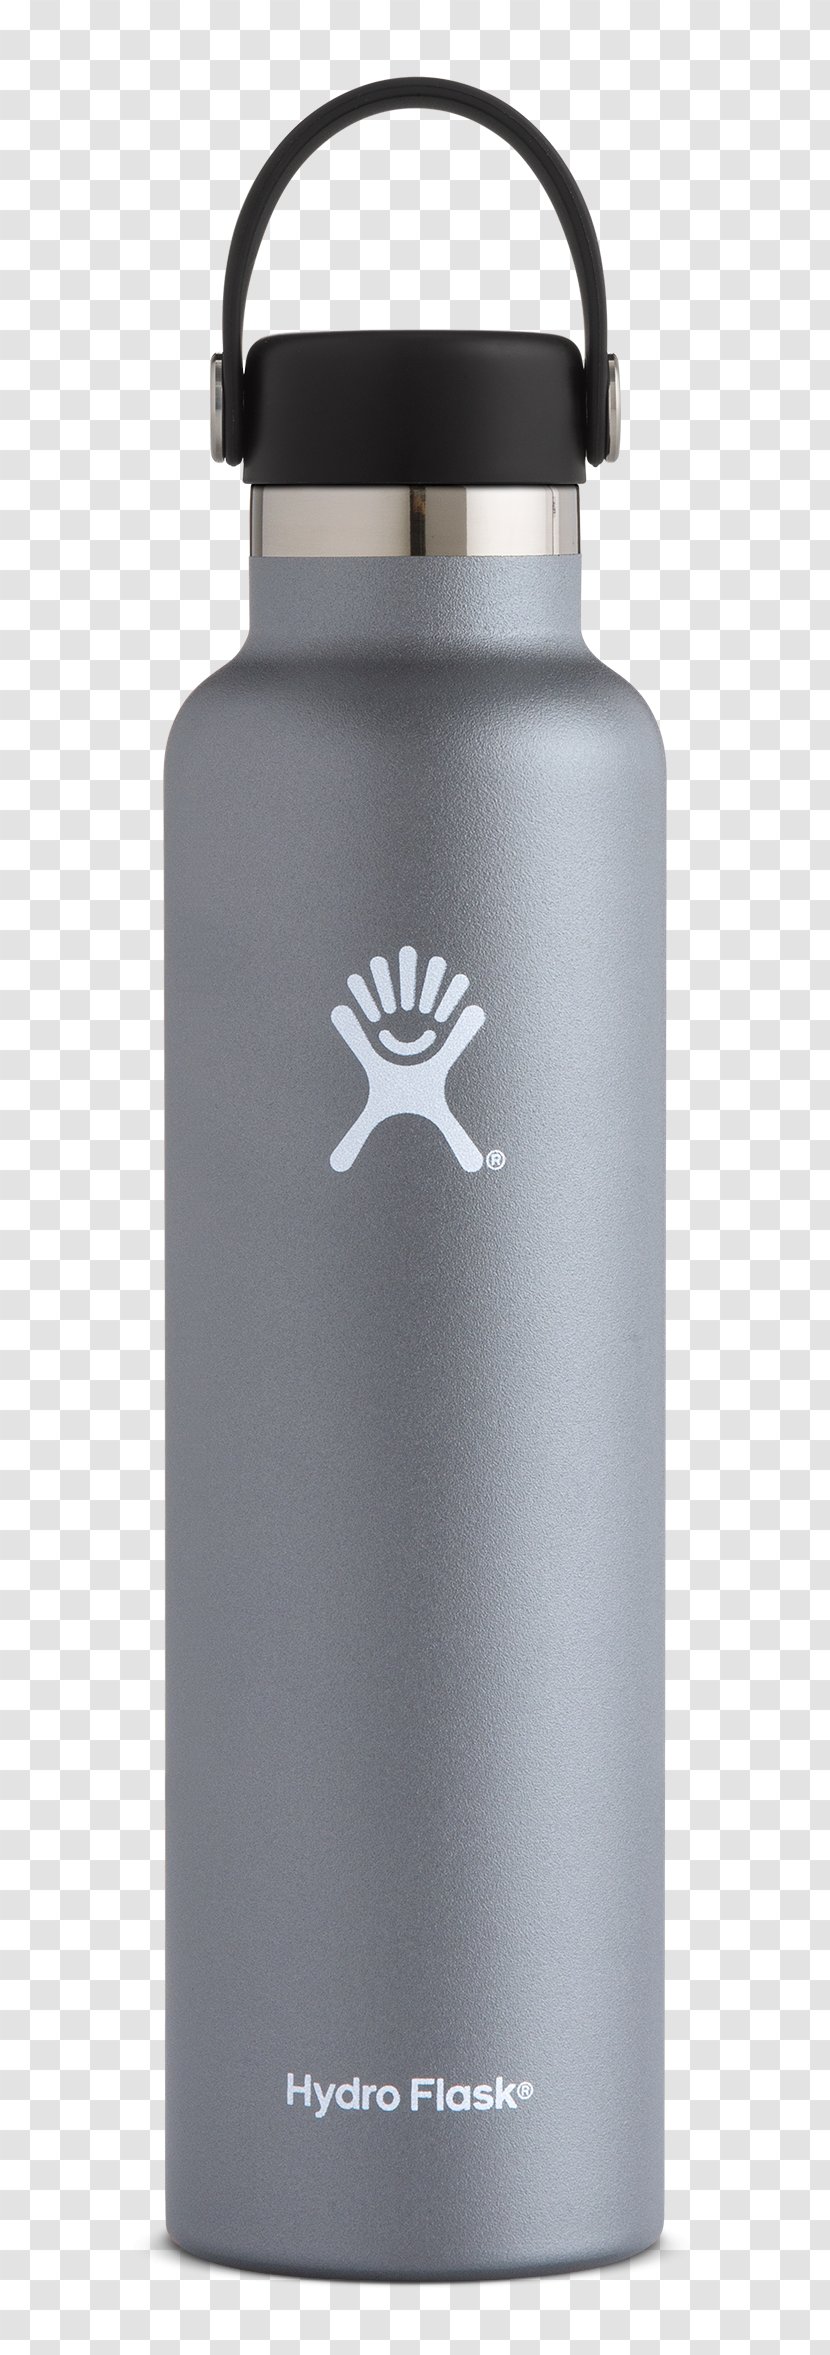 Water Bottles Hydro Flask Drink - Bottle Transparent PNG